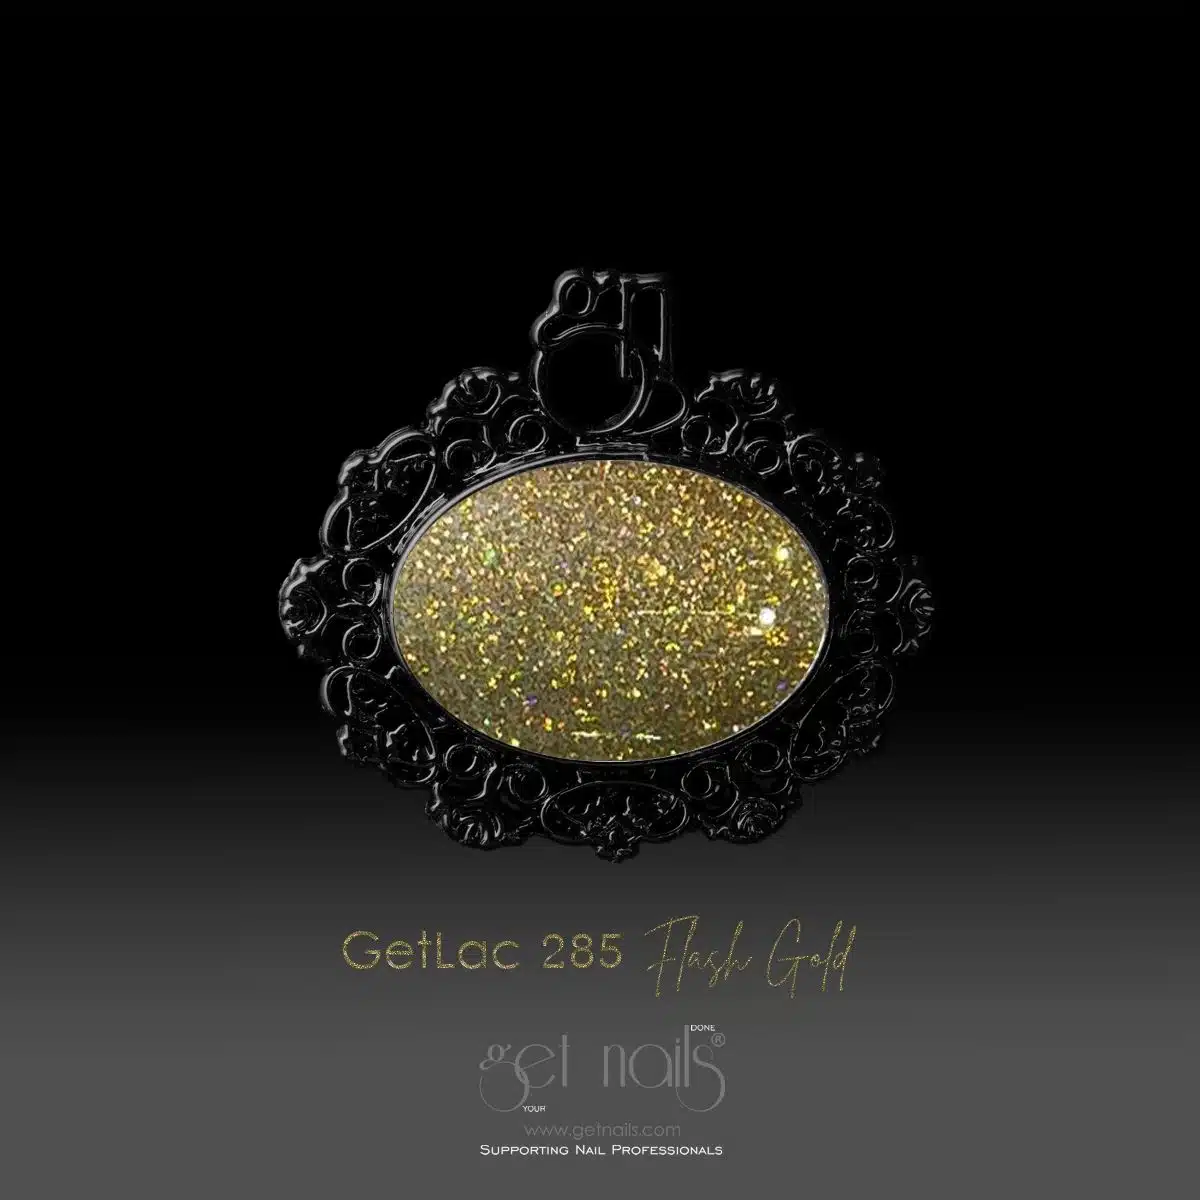 Ottieni Nails Austria - GetLac 285 Flash Gold 15g